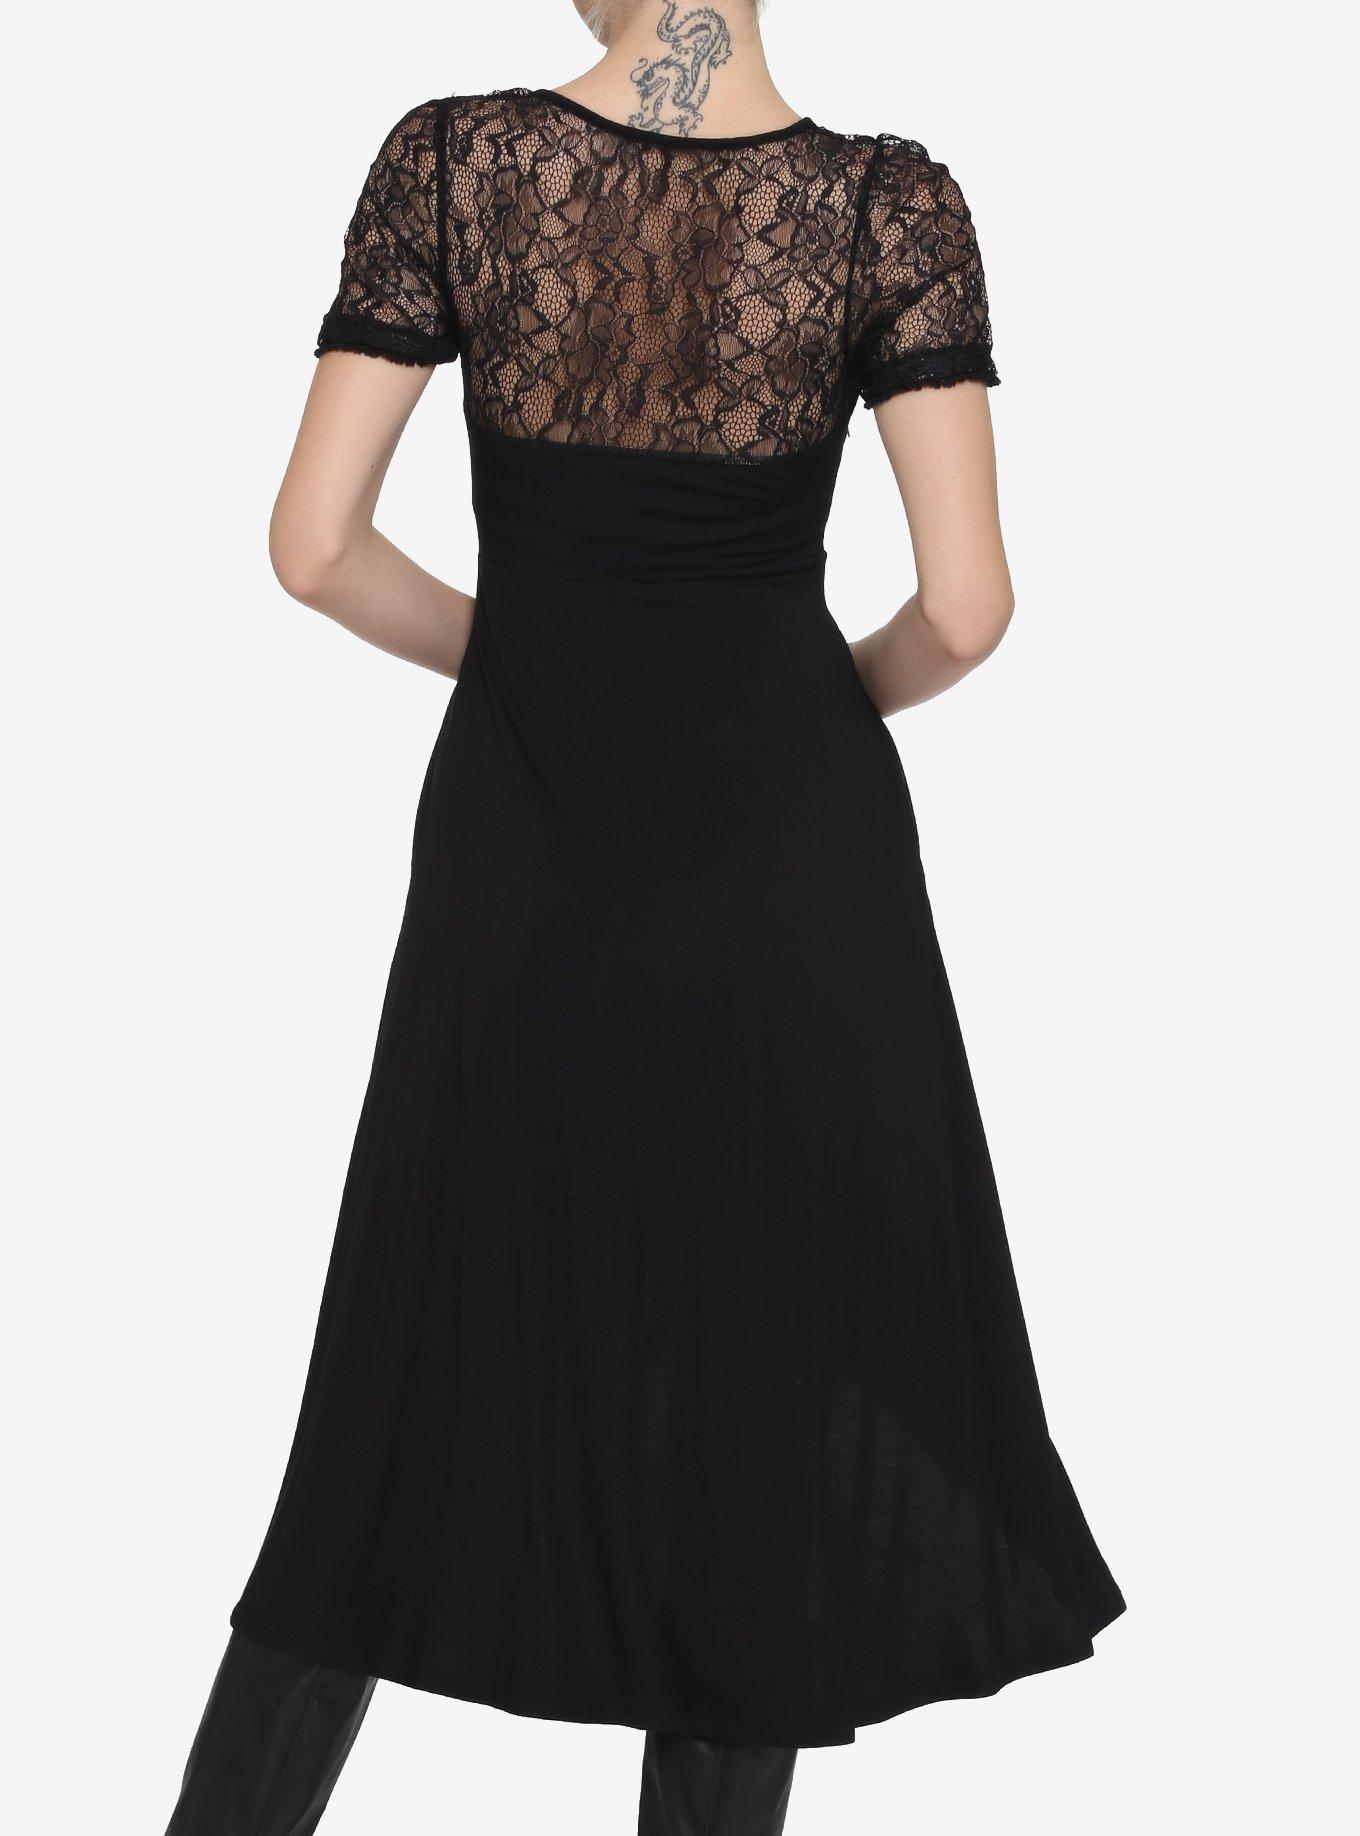 Black Lace-Up Hi-Low Dress, BLACK, alternate